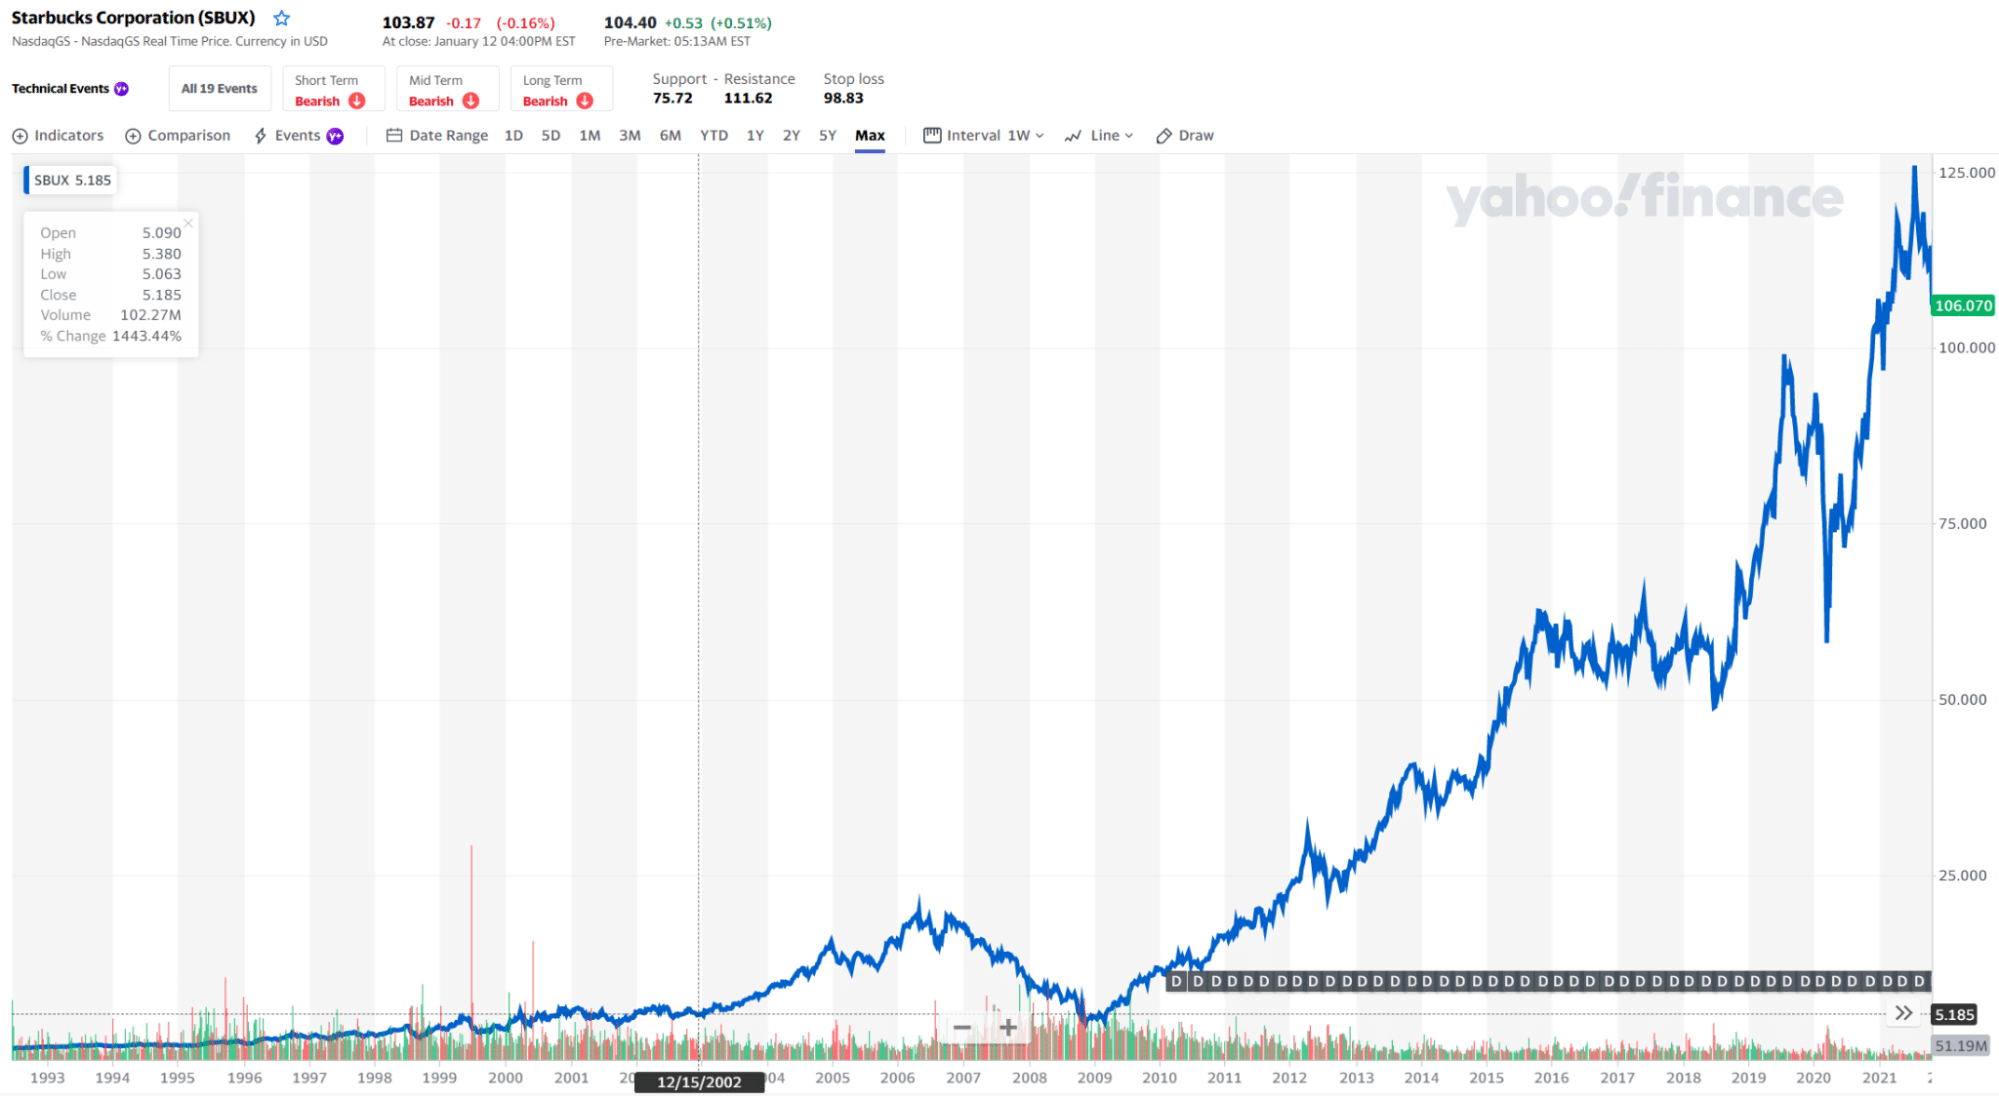 SBUX stock price chart 1993-2022